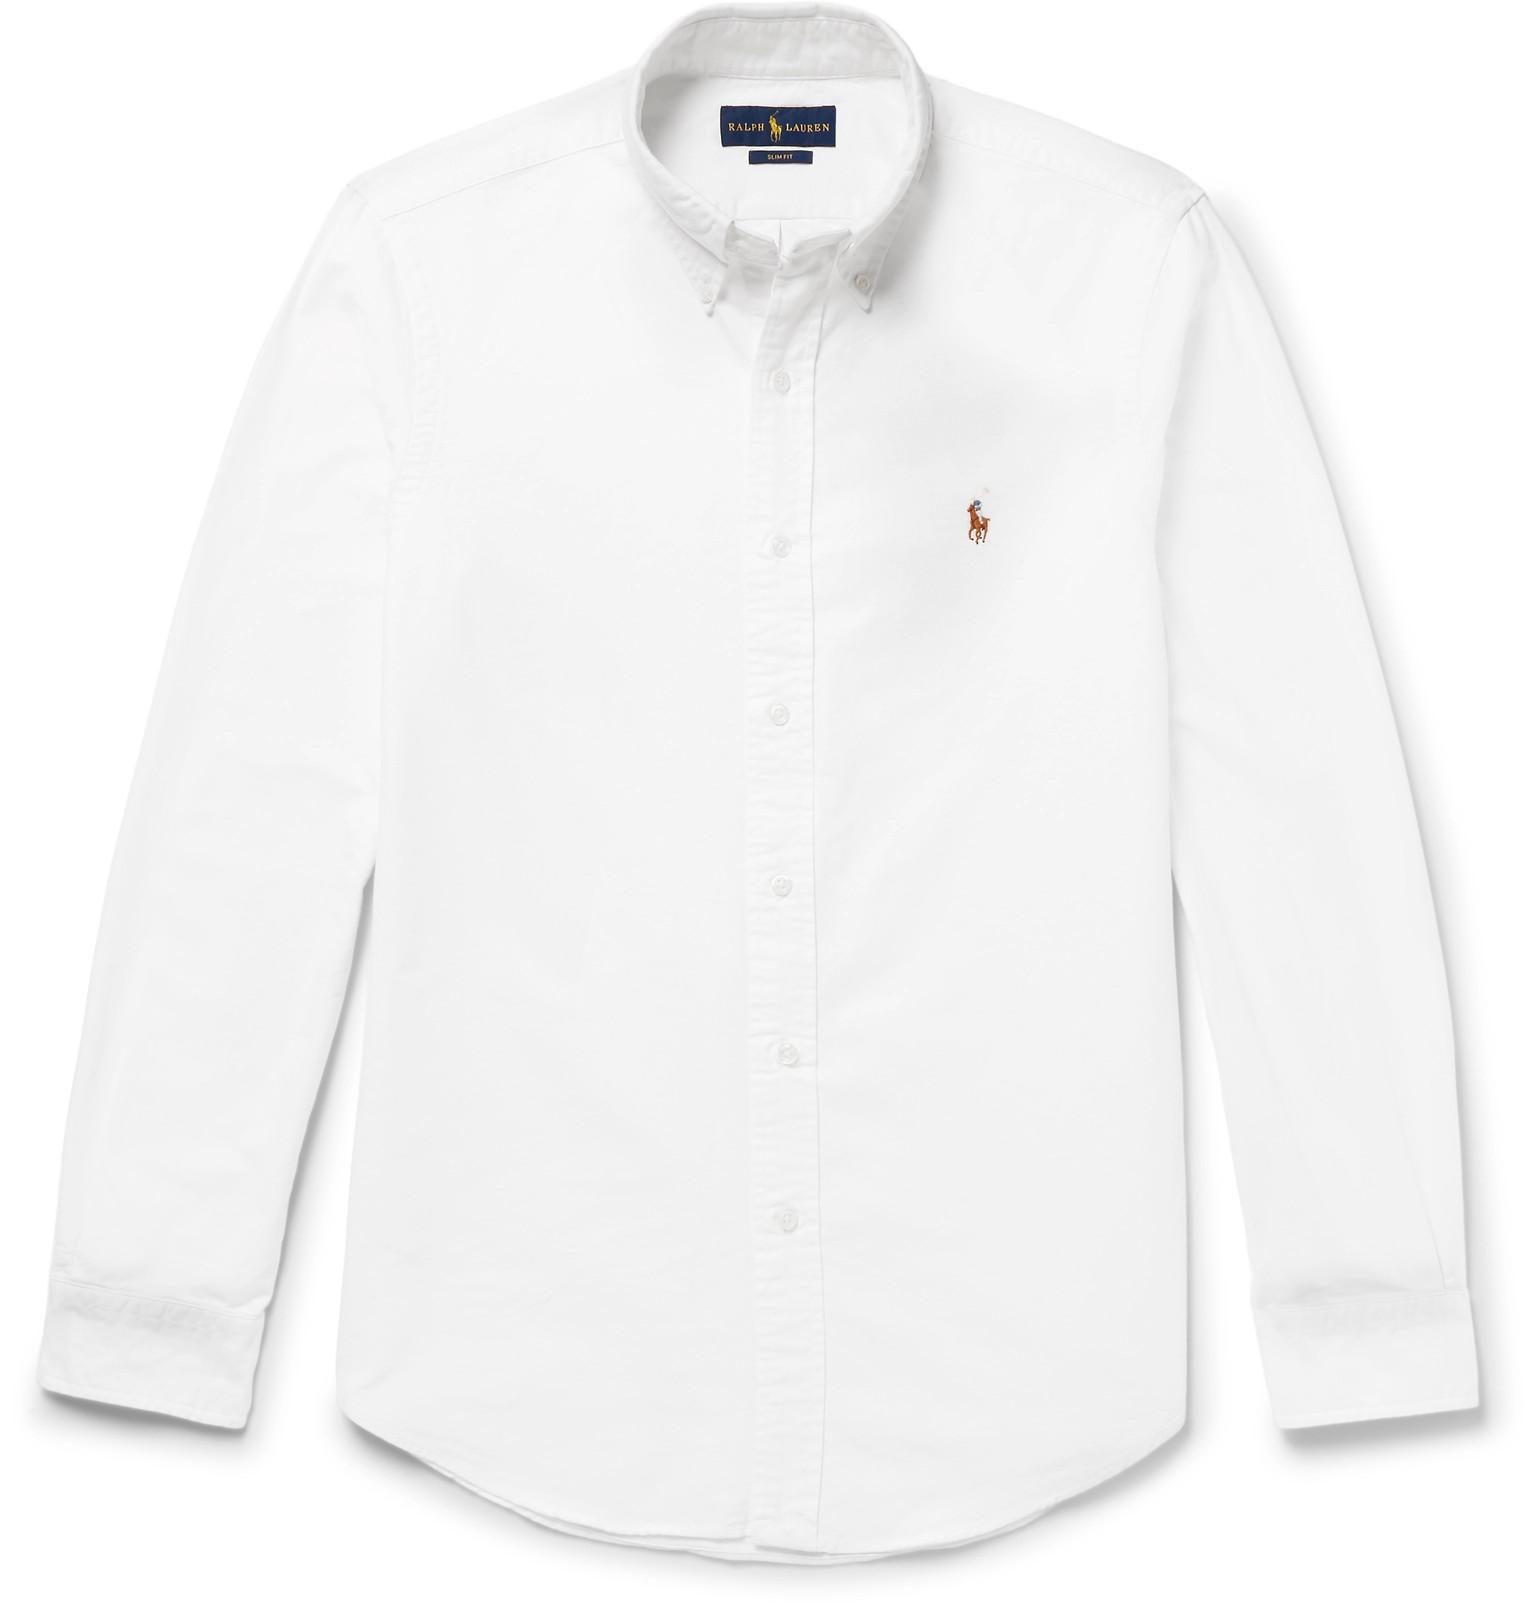 Lyst - Polo Ralph Lauren Slim-fit Cotton Oxford Shirt in White for Men